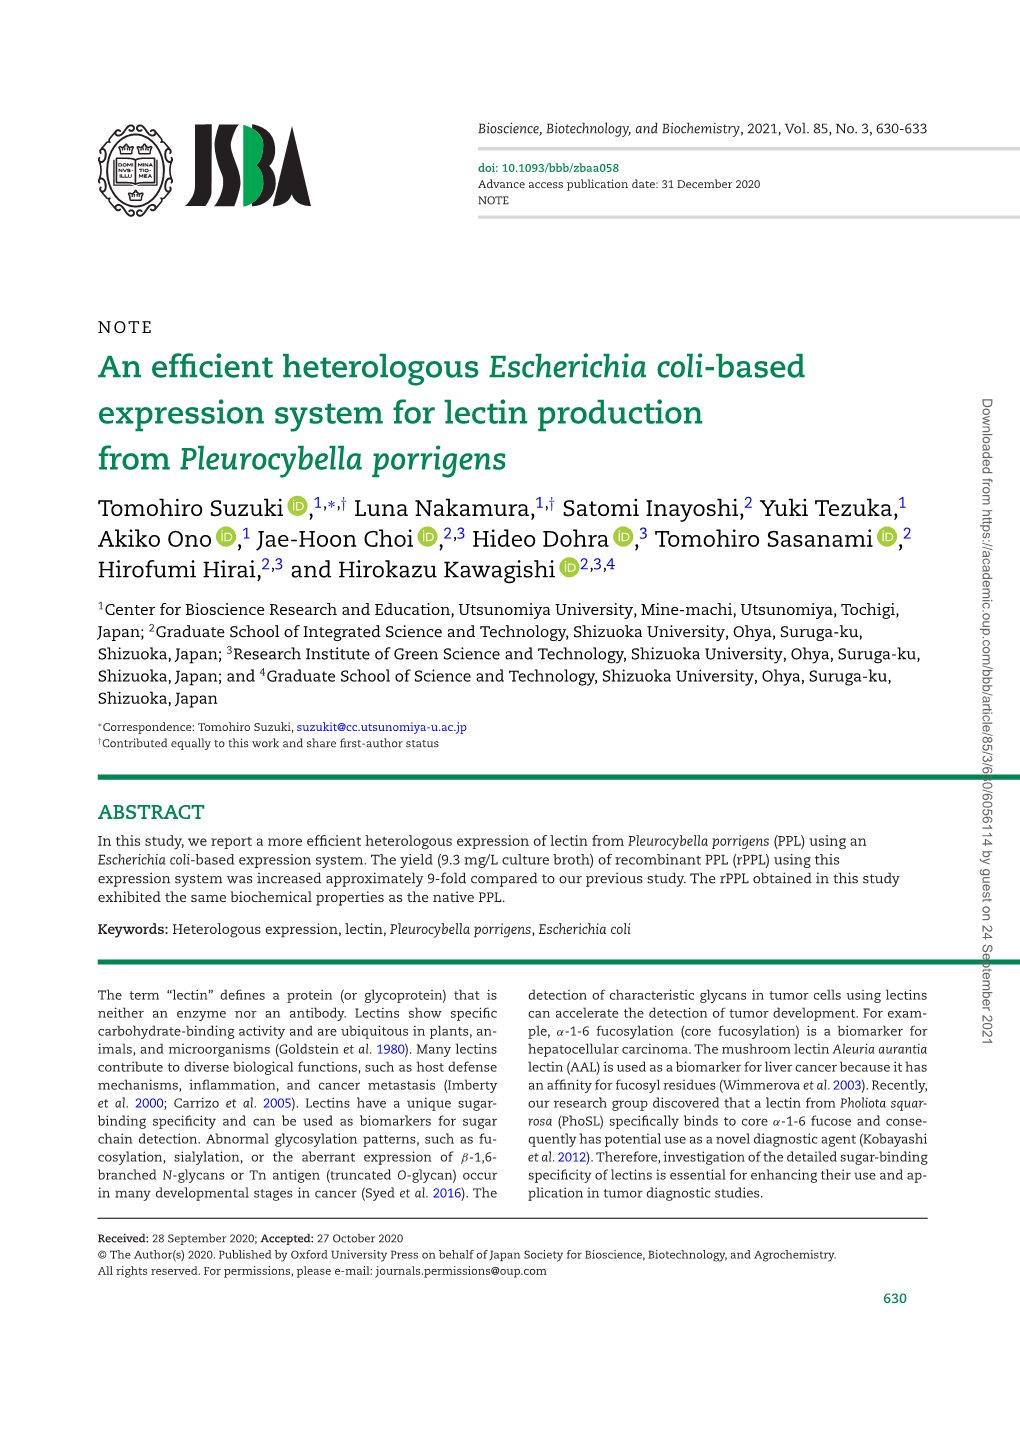 An Efficient Heterologous Escherichia Coli-Based Expression System For